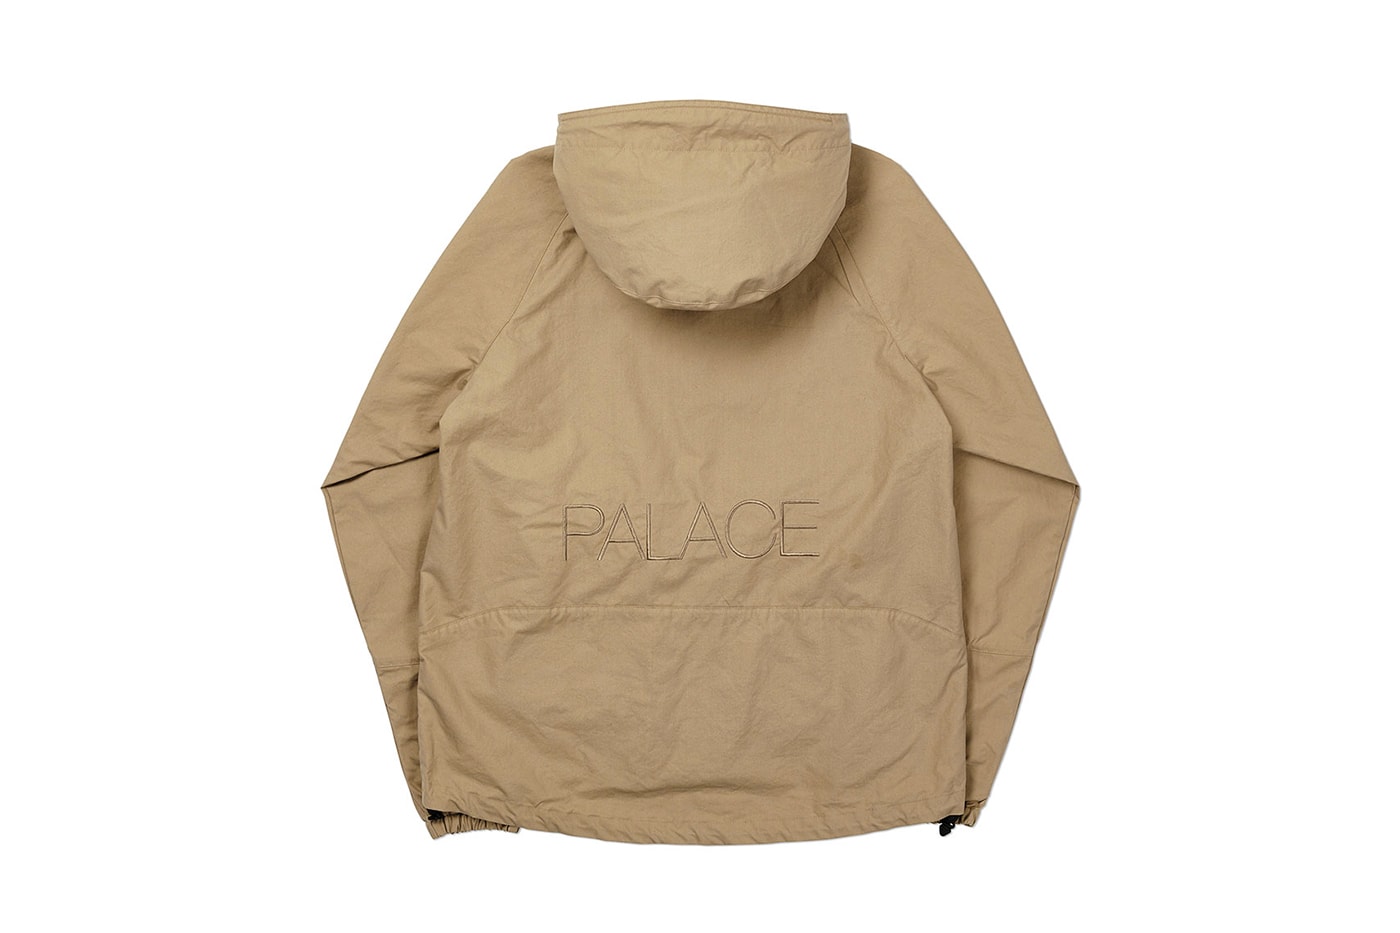 Palace Fall 2020 Outerwear and Jackets avirex jackets london streewear leather skateboarding